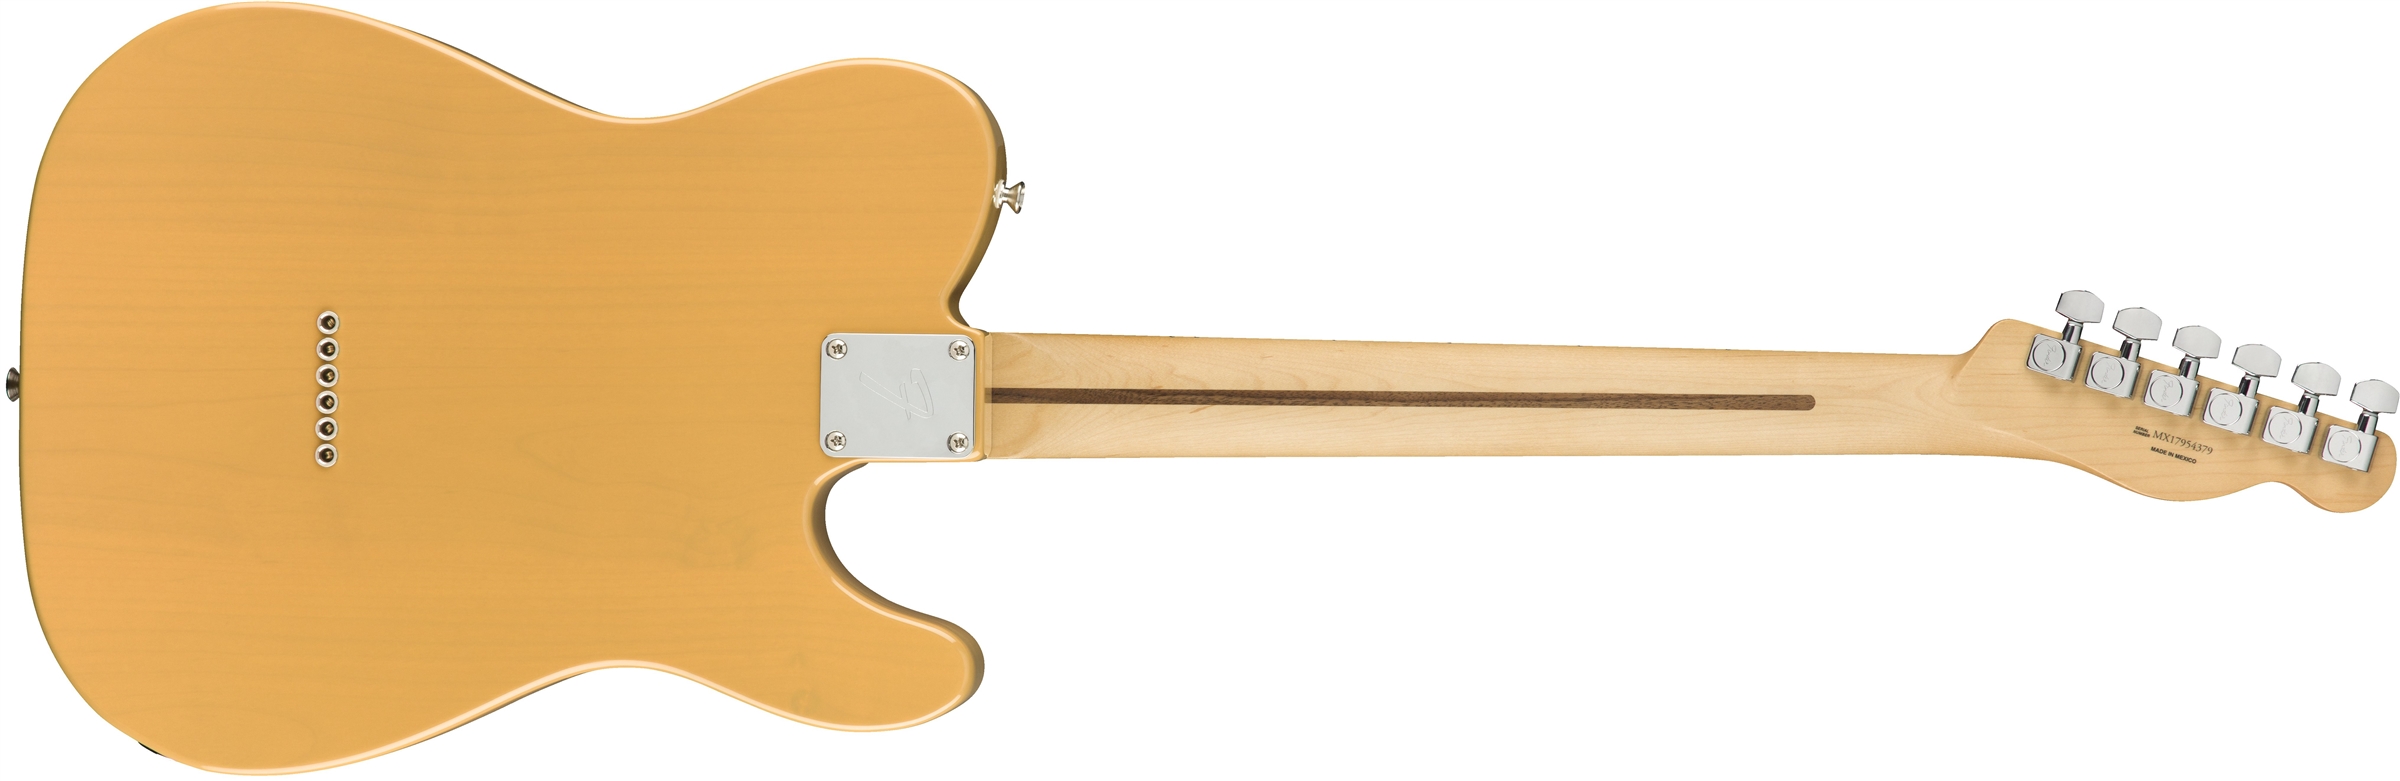 Fender Tele Player Lh Gaucher Mex 2s Mn - Butterscotch Blonde - Guitare Électrique Gaucher - Variation 1